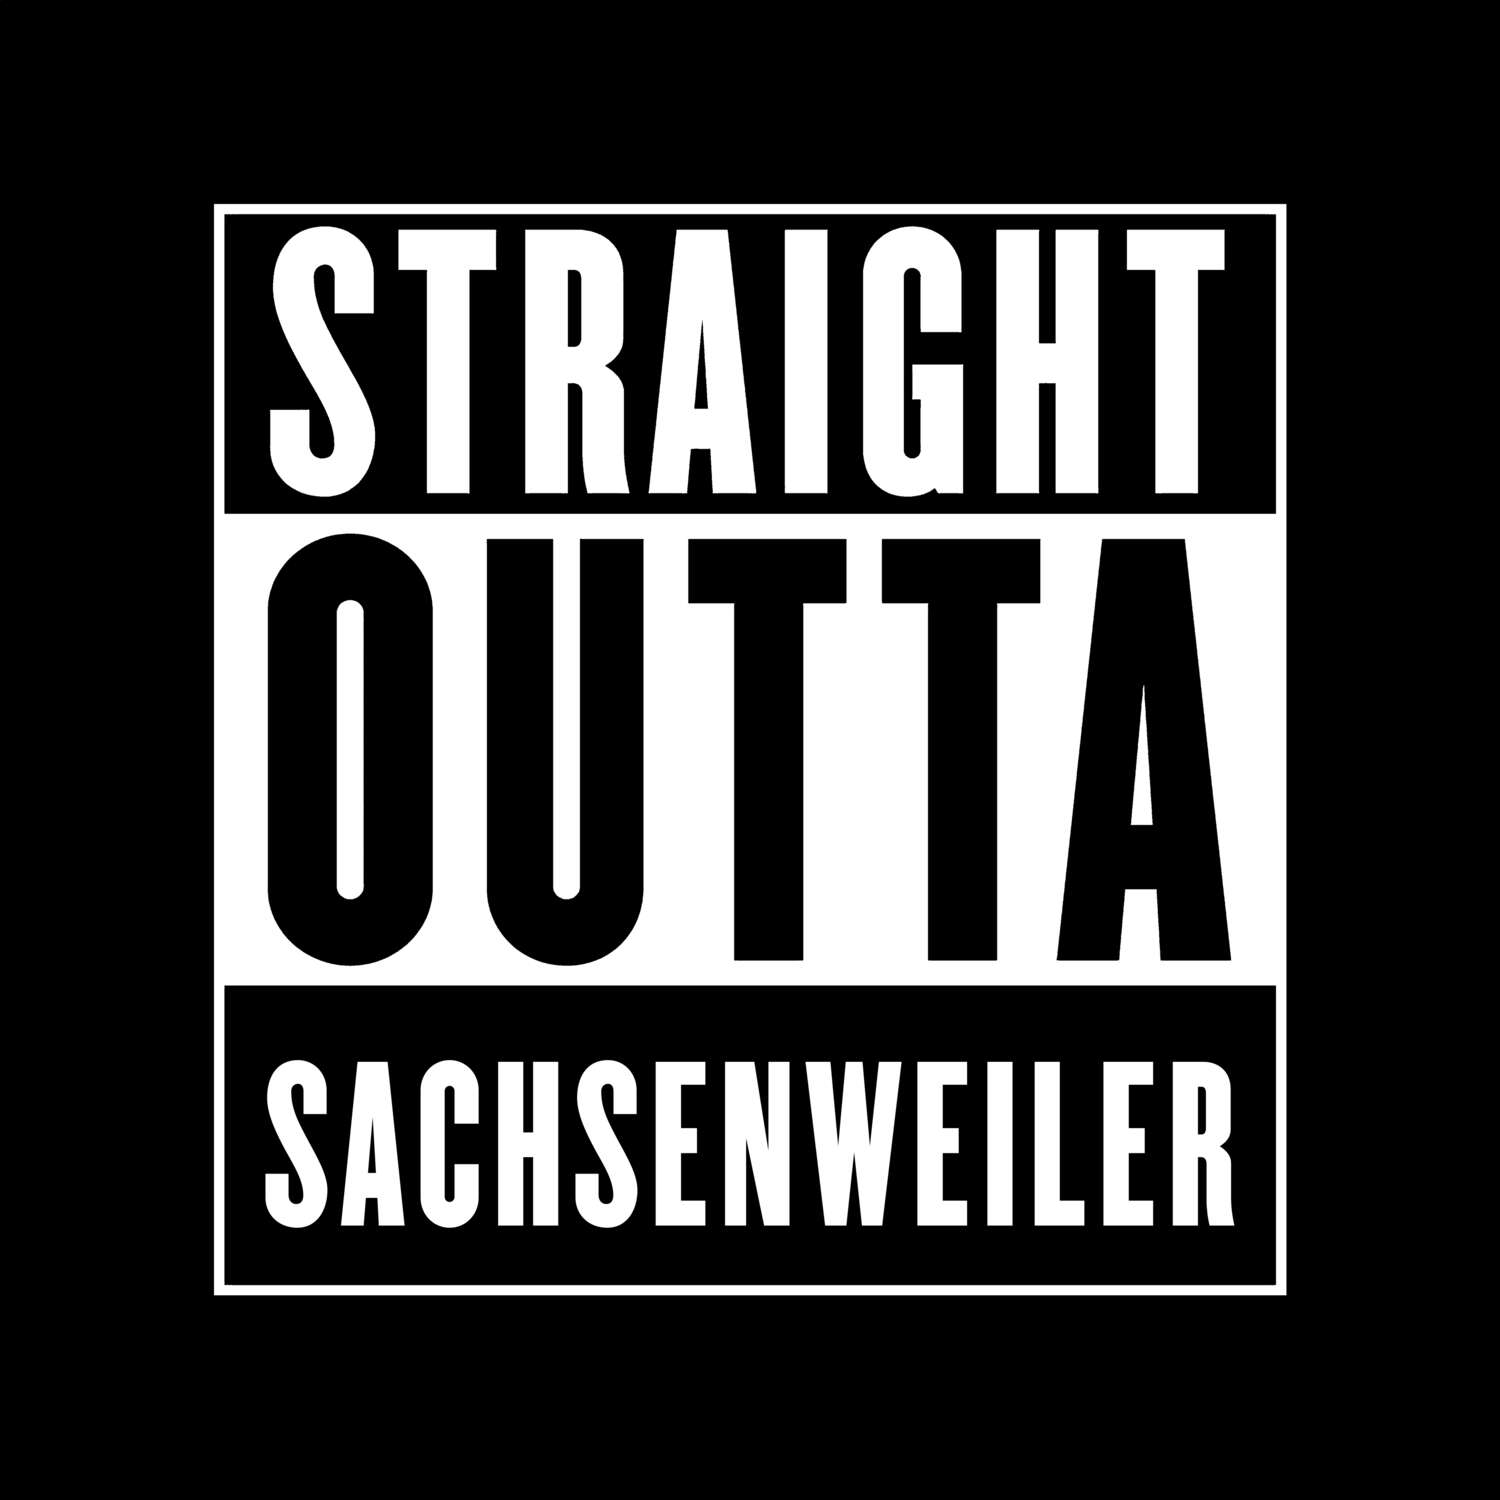 Sachsenweiler T-Shirt »Straight Outta«